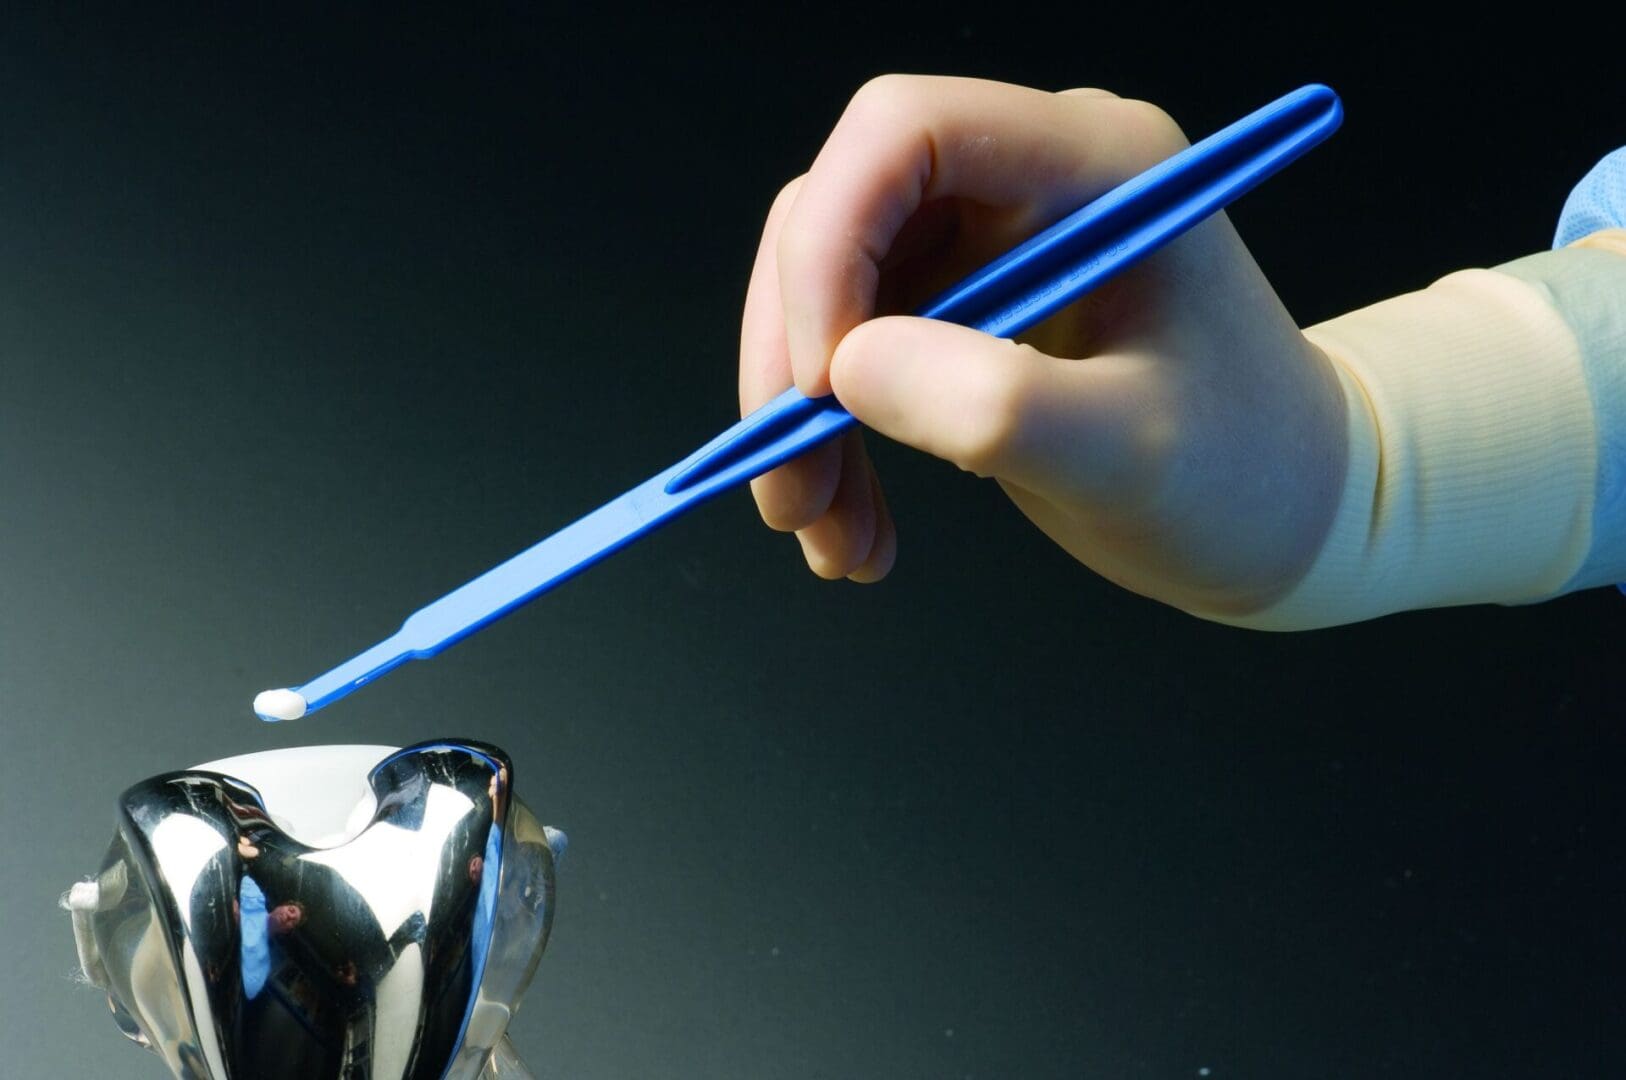 A person holding a pair of blue chopsticks.